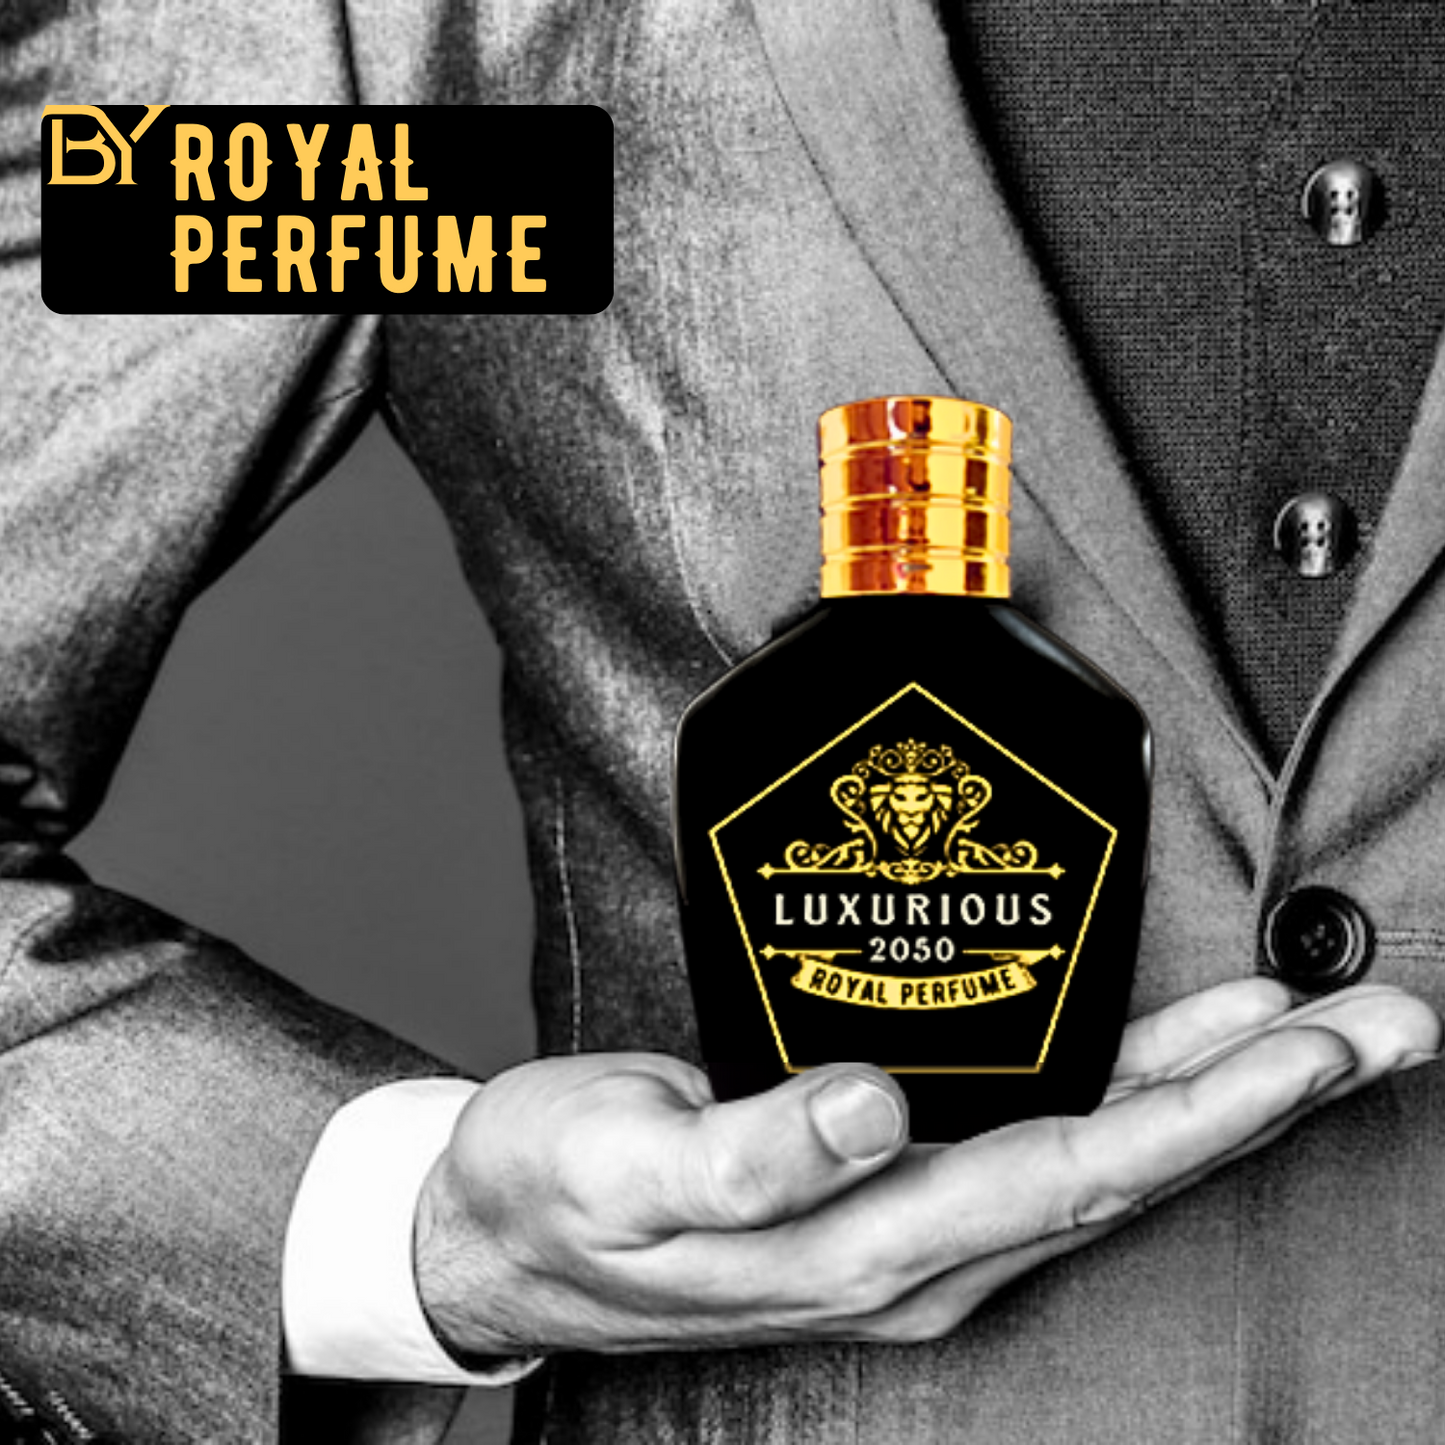 Luxurious 2050 by Royal Perfume 100ML